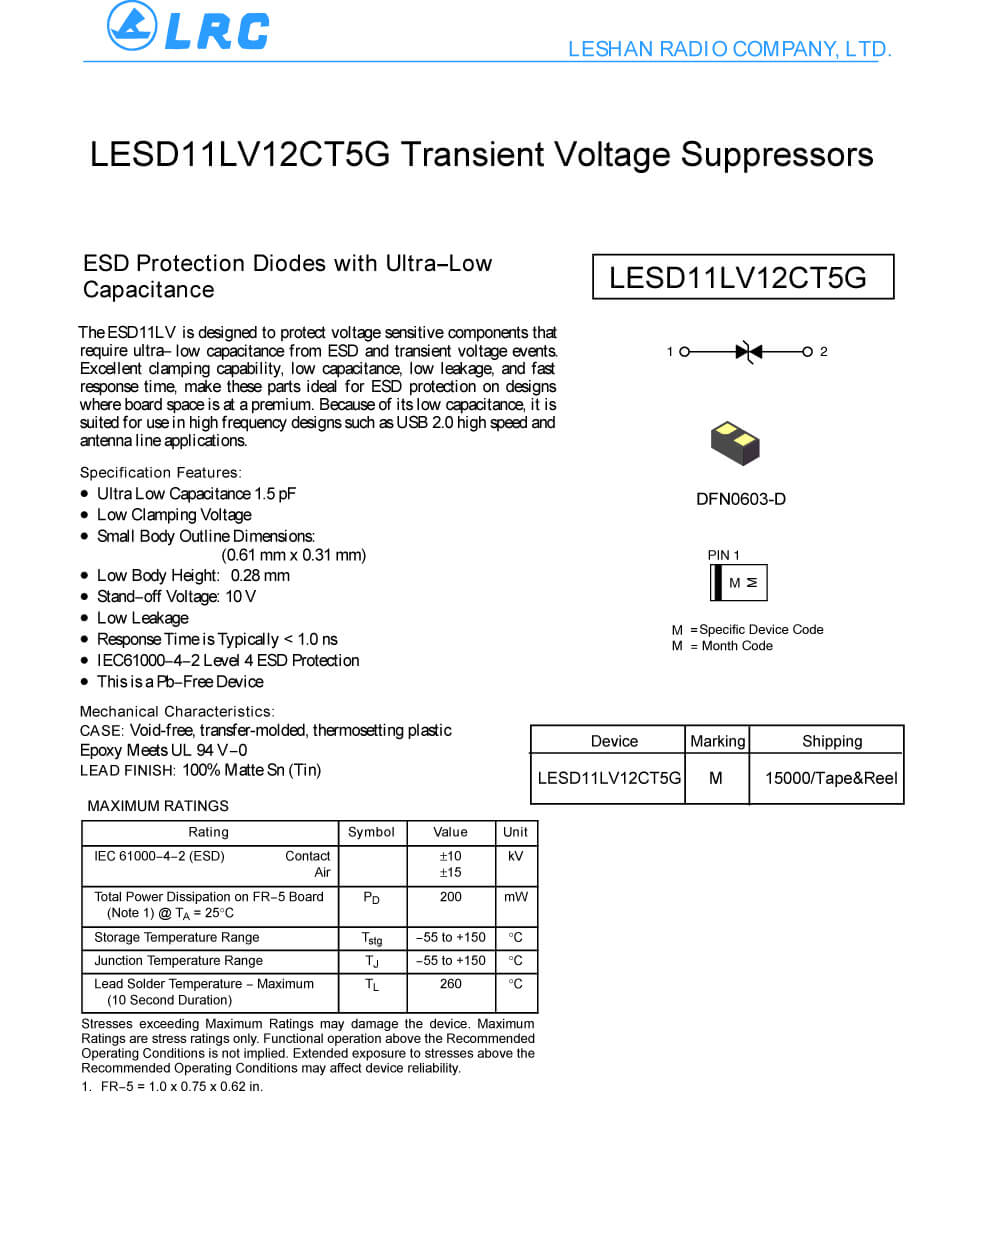 Details Of LESD11LV12CT5G